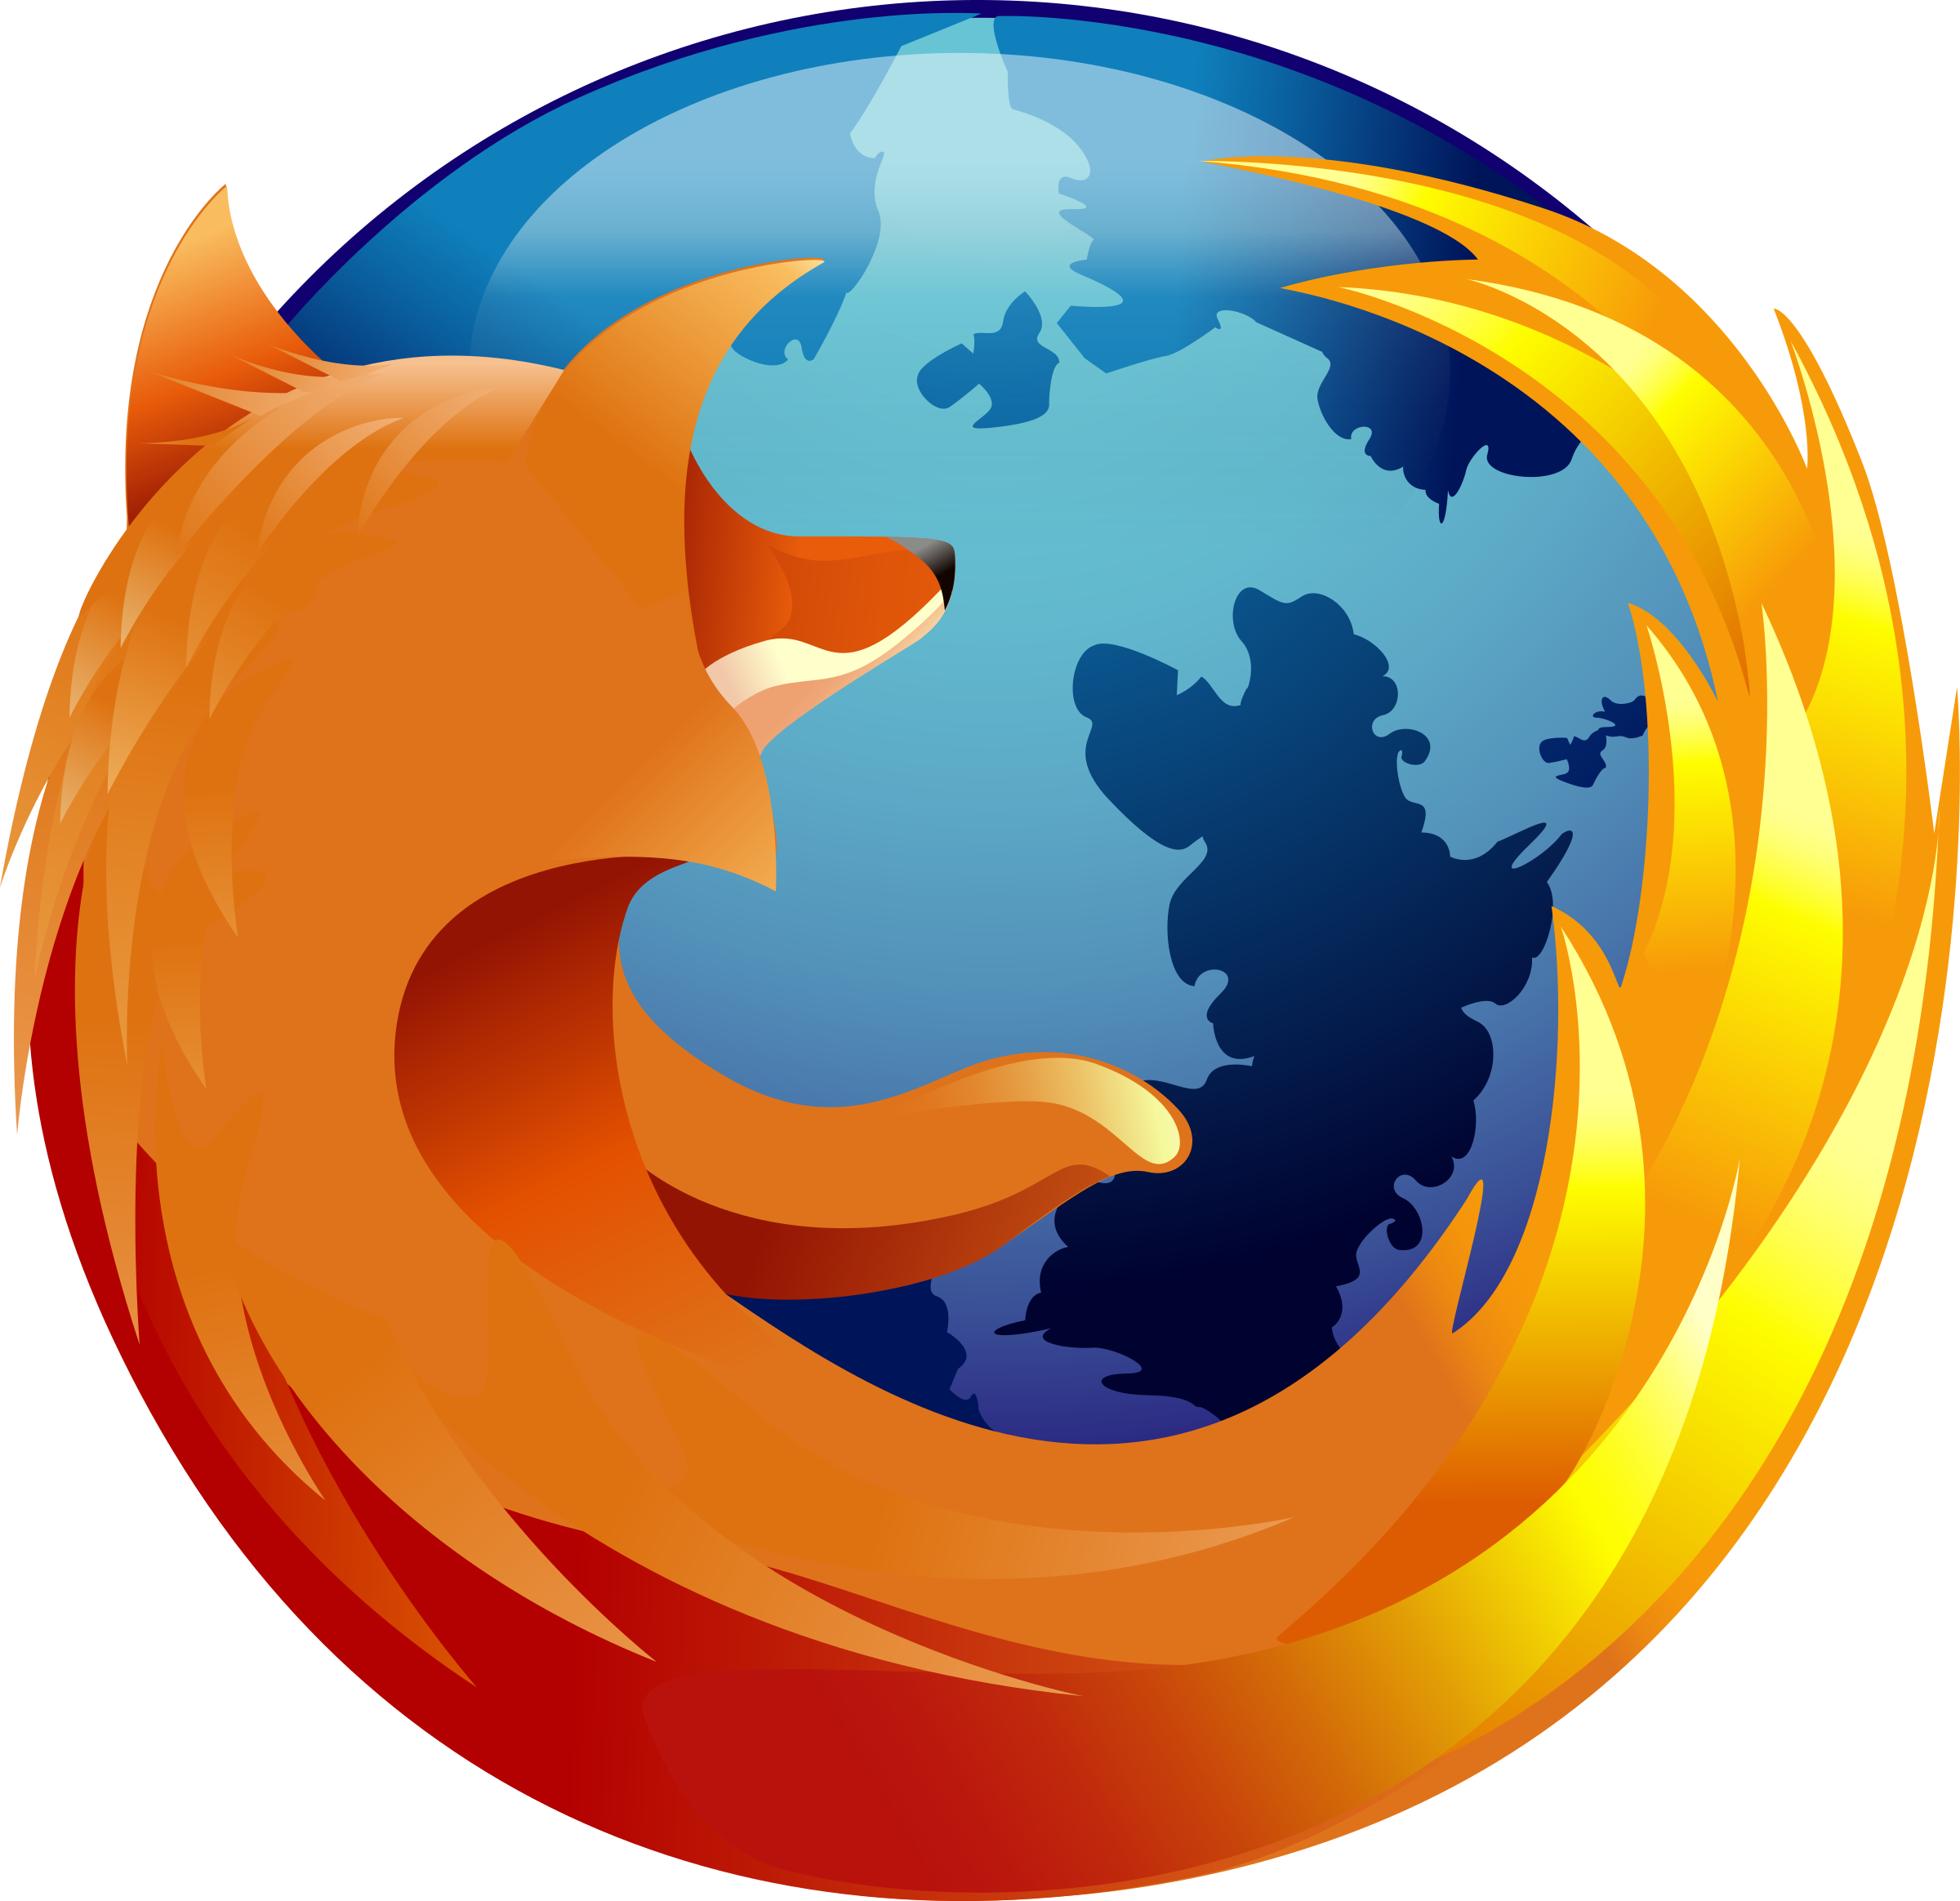 Mozilla Firefox Logo Png Transparent & Svg Vector - Pluspng Pluspng, Mozilla Firefox Logo PNG - Free PNG